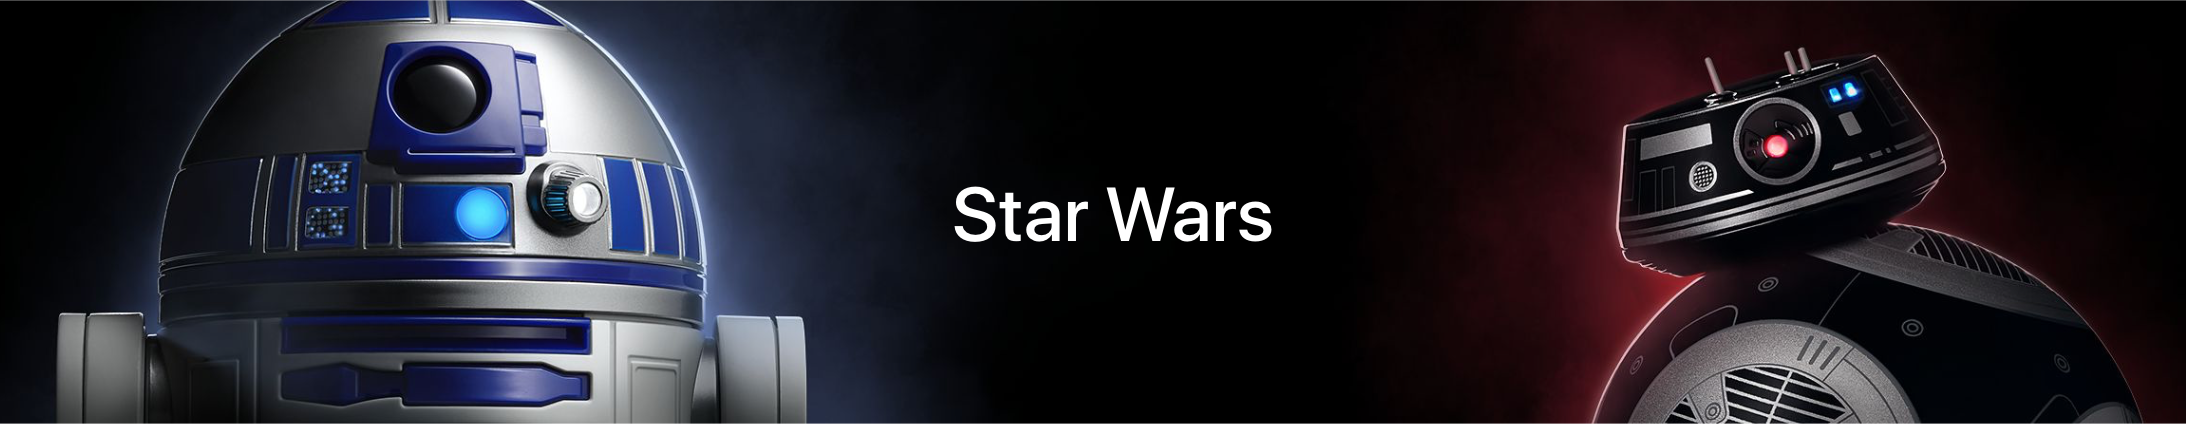 Star Wars Apple